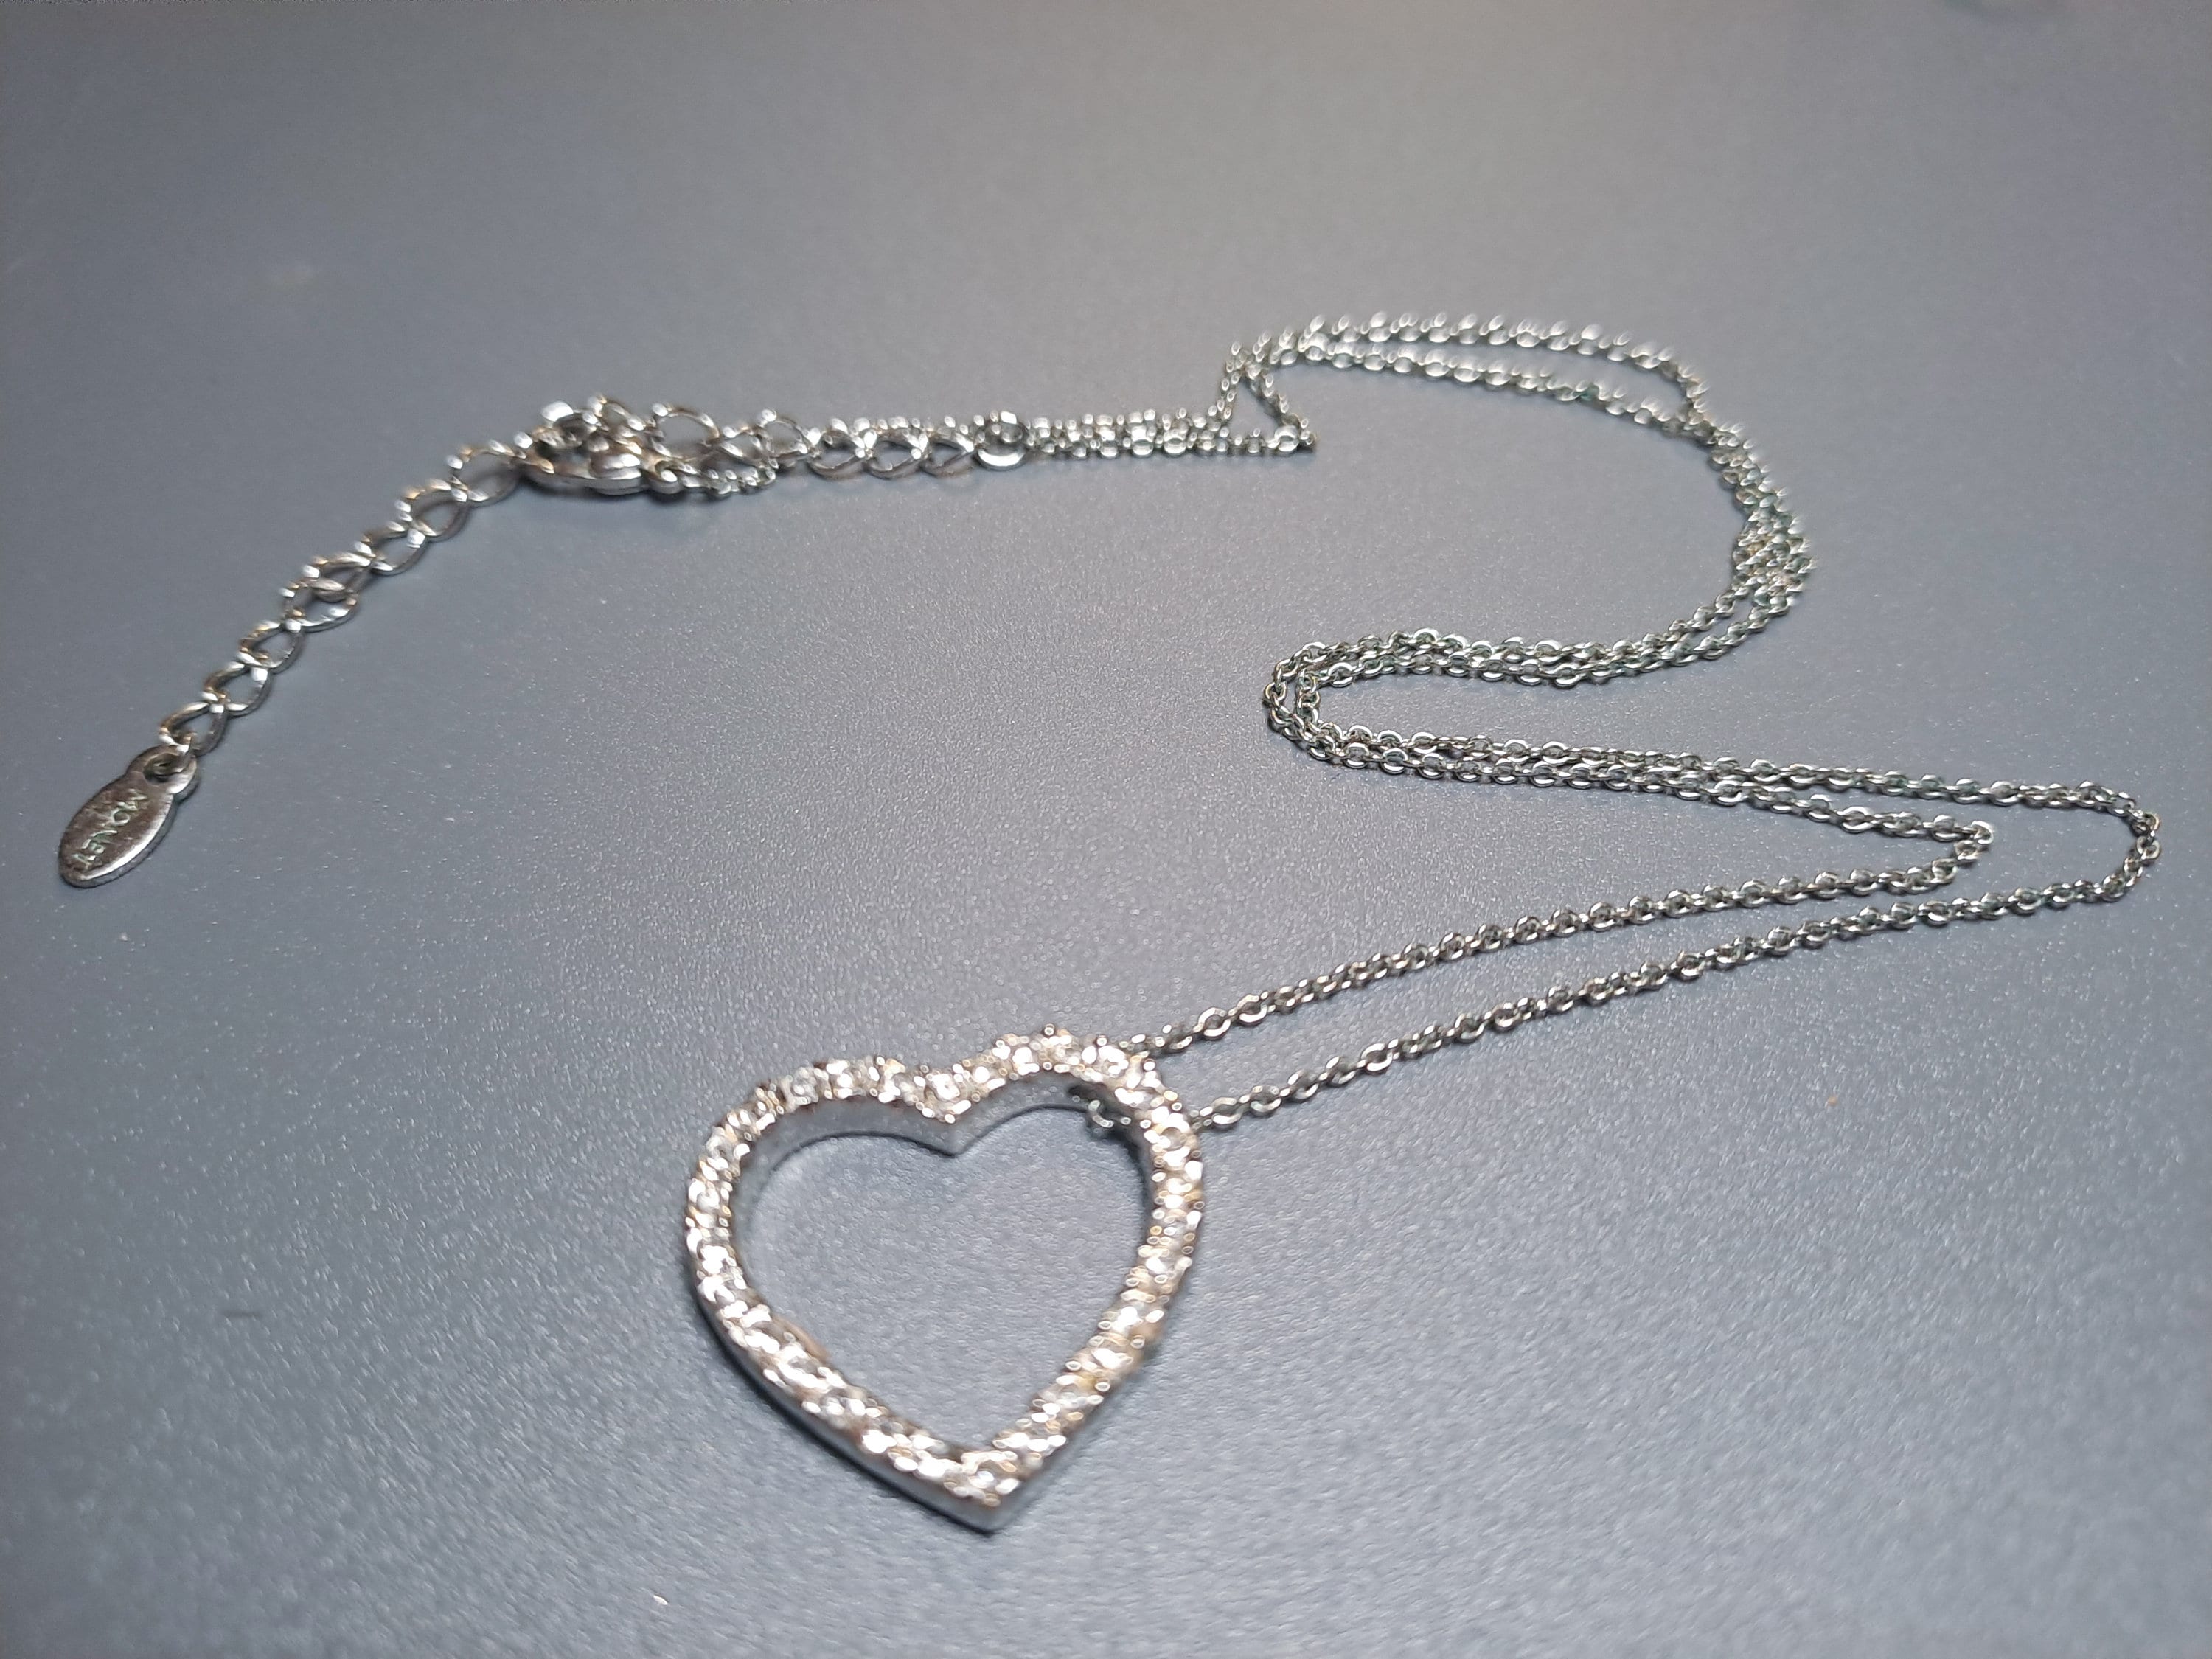 Crystal Heart Pendant Choker Necklace by Monet Vintag… - Gem